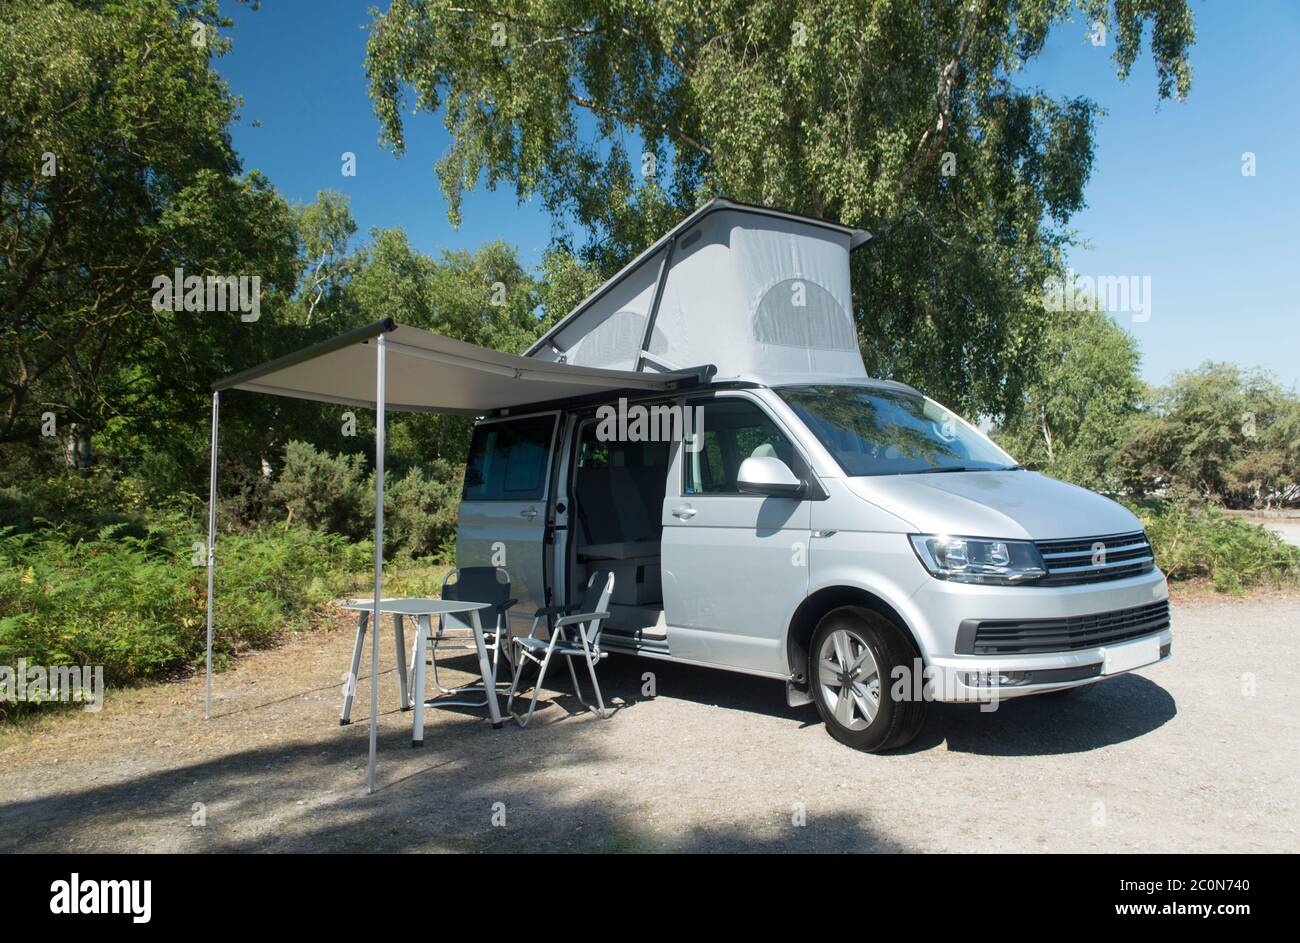 VW Camper Van Vacanze, destinazione di vacanza, viaggiare in un Camper Van per le vacanze, destinazione di vacanza per l'estate in una casa mobile Foto Stock